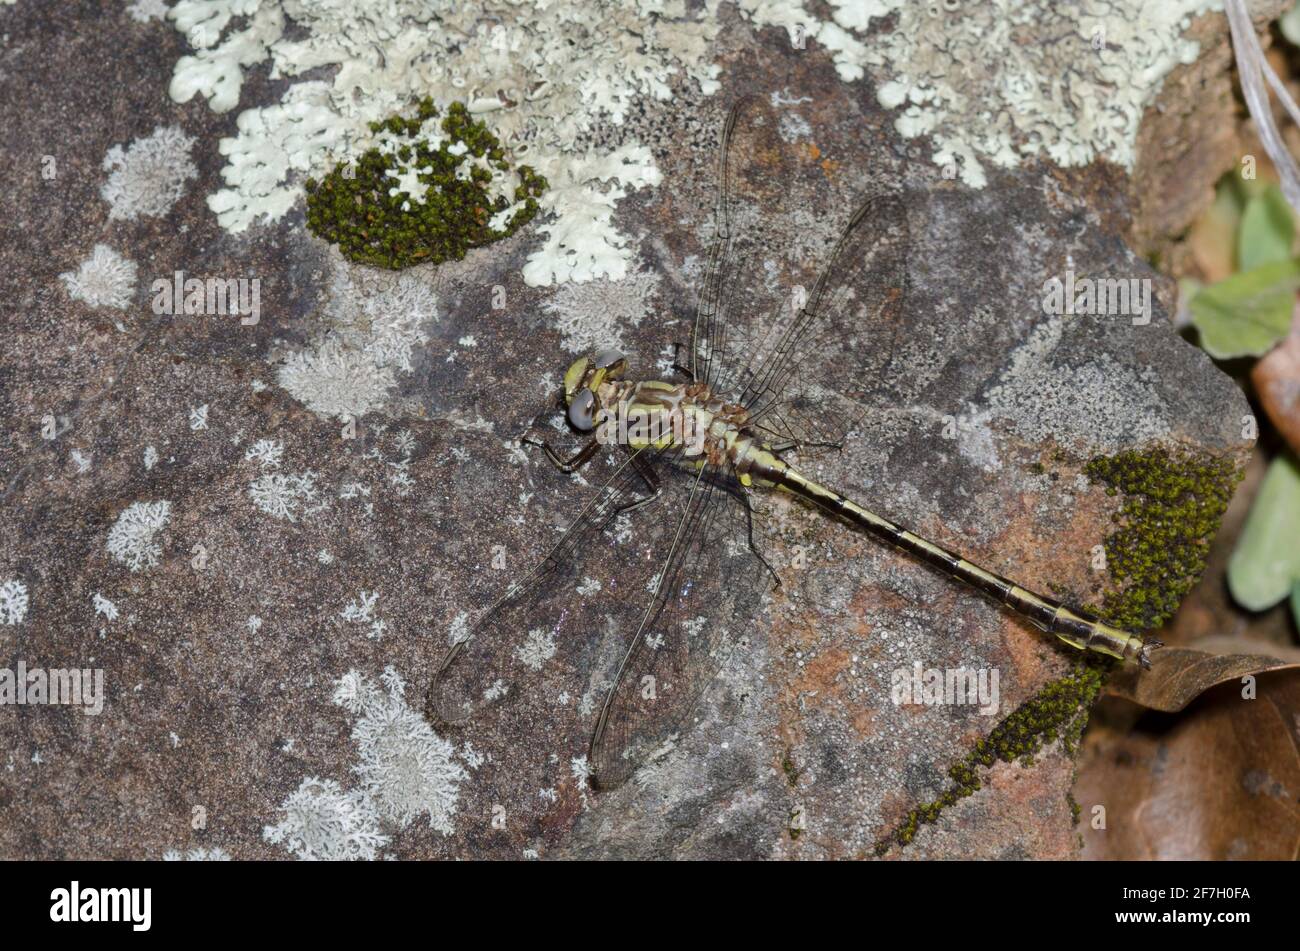 Oklahoma Clubtail, Phanogomphus oklahomensis, male Stock Photo